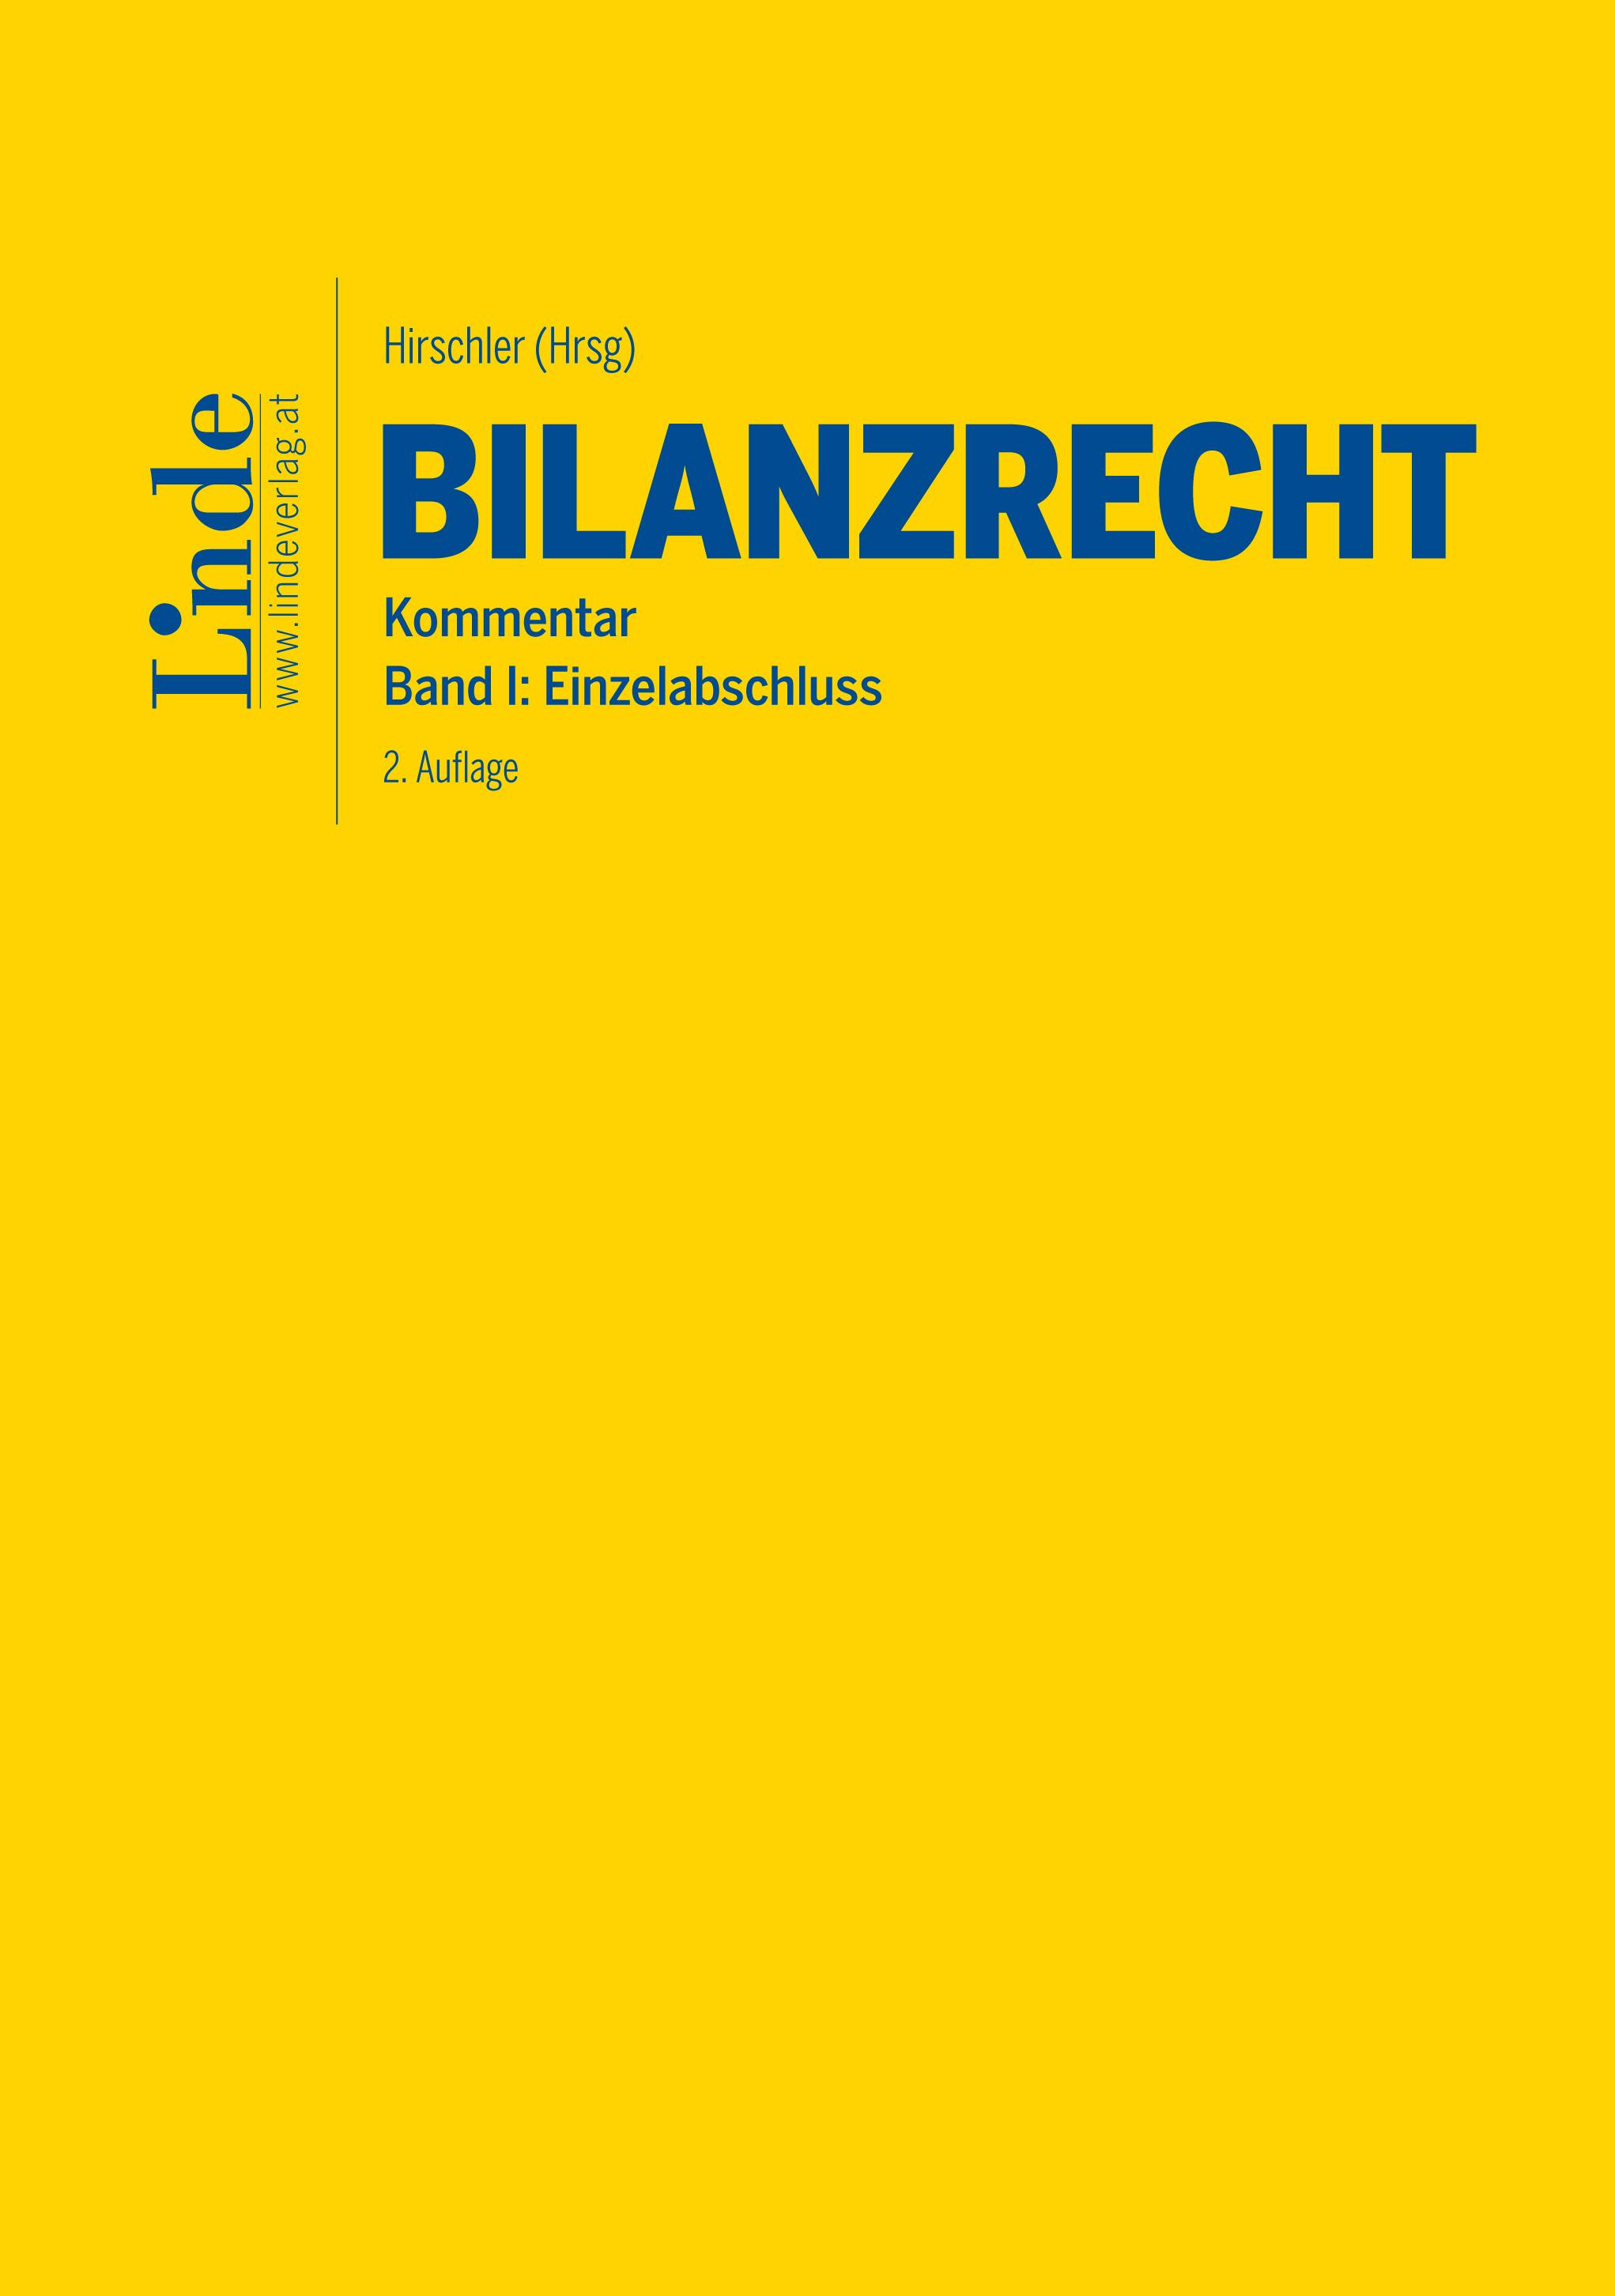 Hirschler (Hrsg.)
Bilanzrecht
Kommentar | Band I: Einzelabschluss